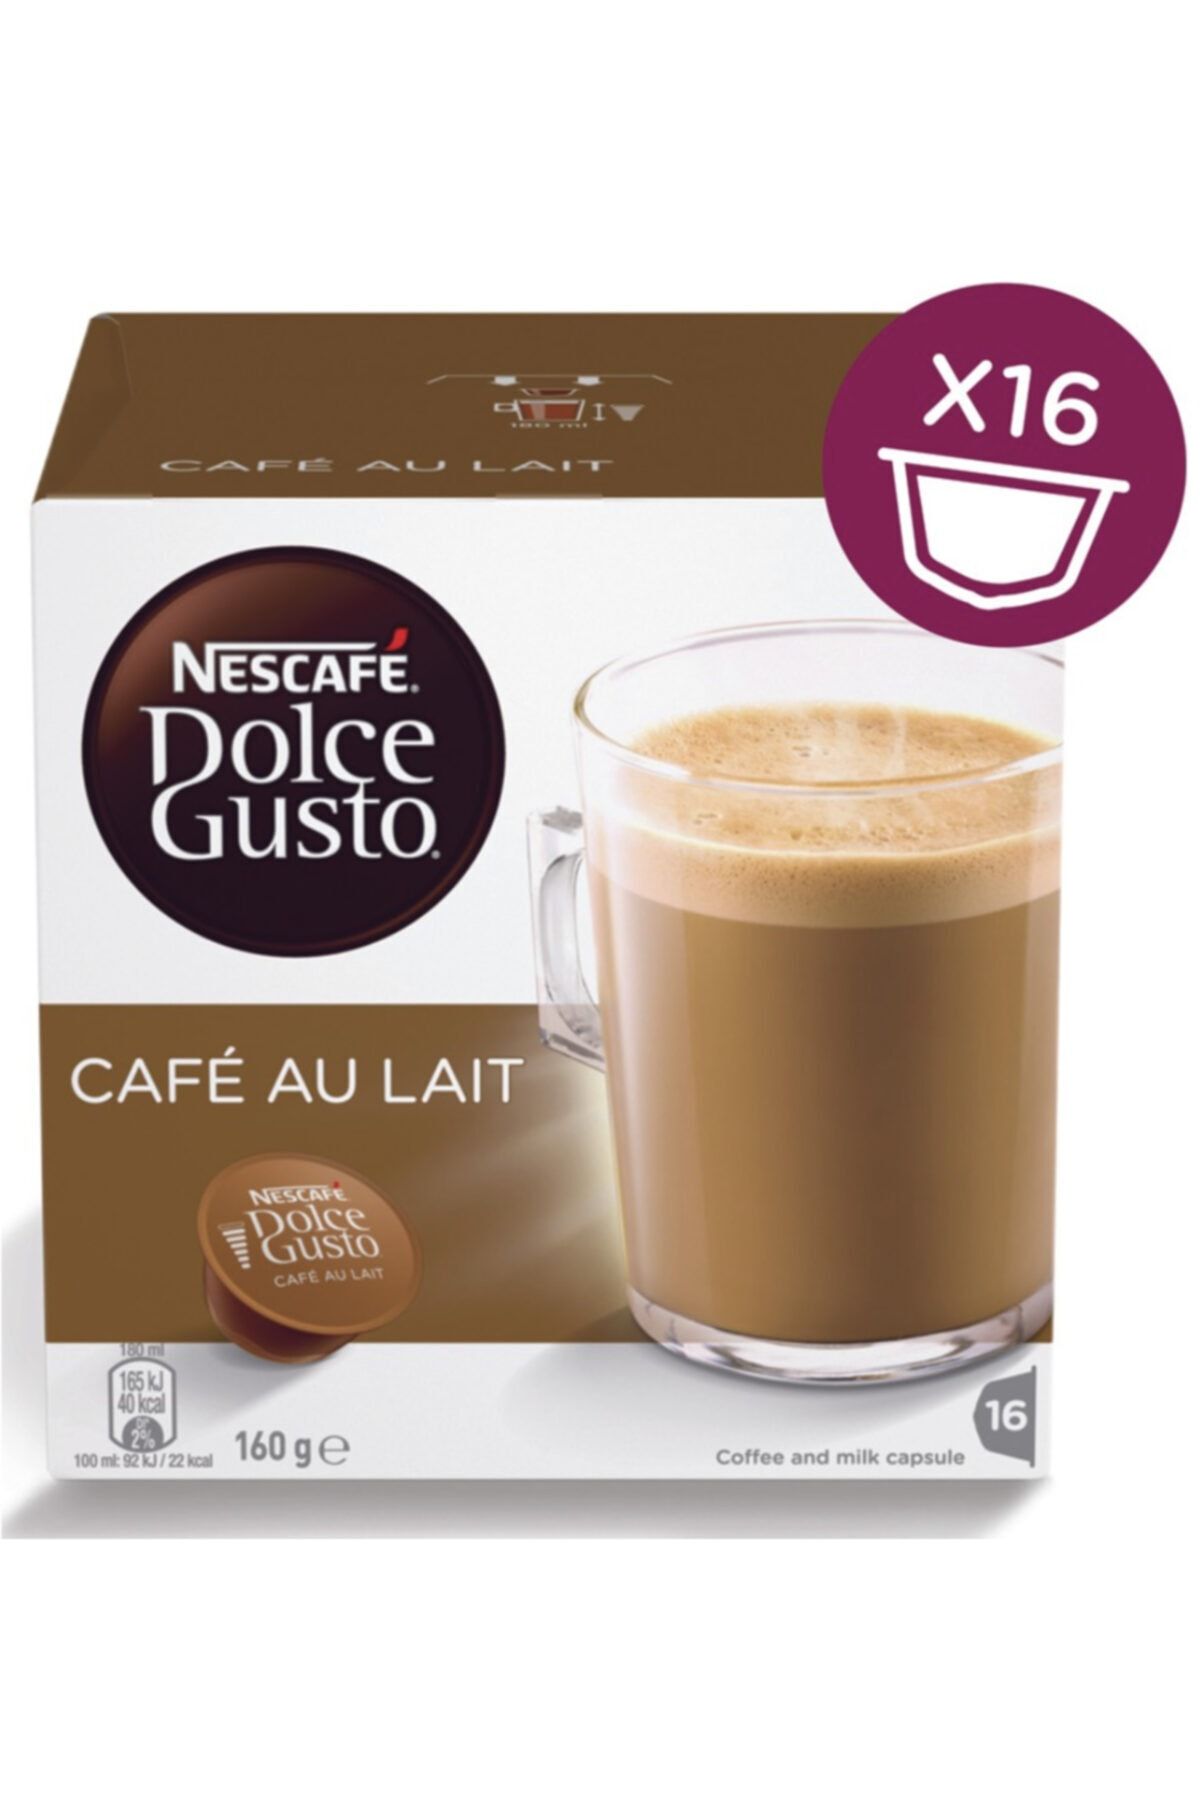 Nescafe Dolce Gusto Cafe Au Lait